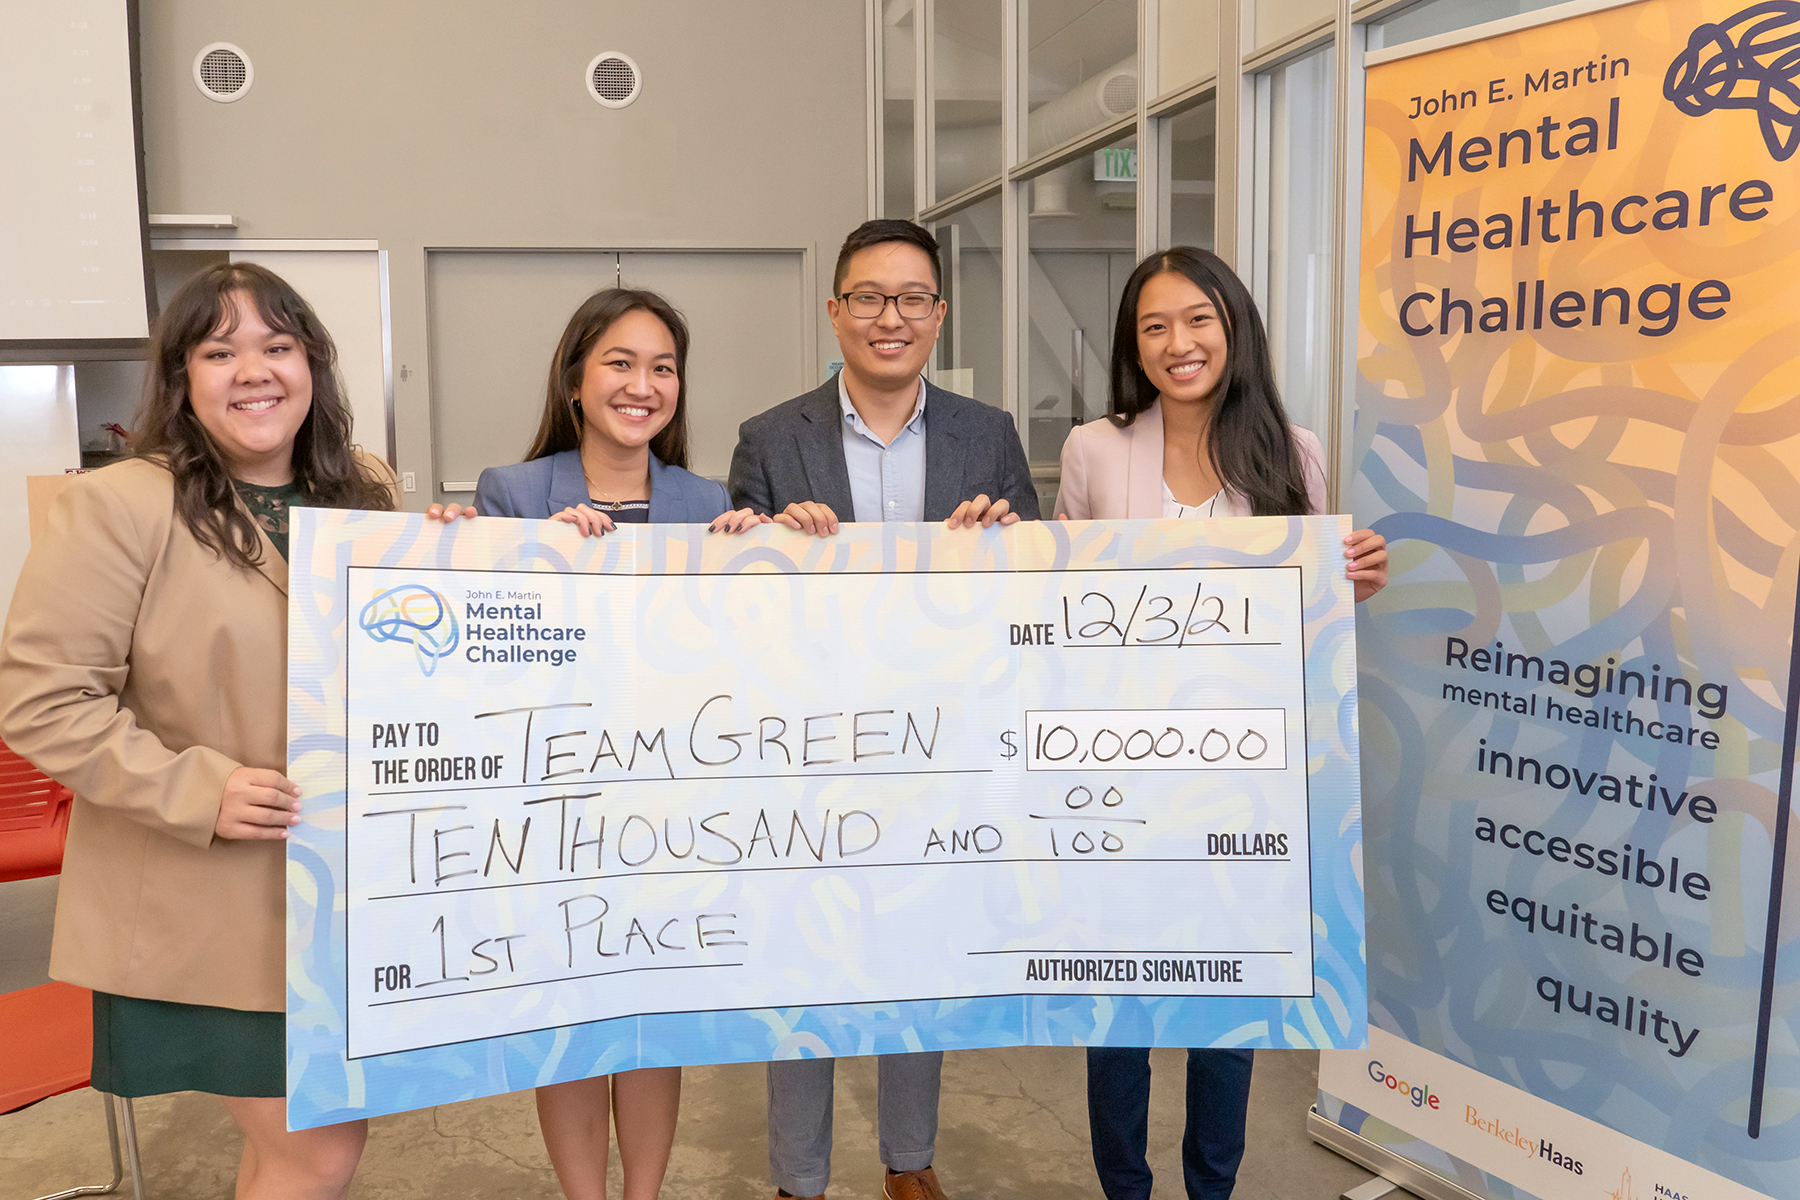 Team Green, winners of the John E. Martin Mental Healthcare Challenge